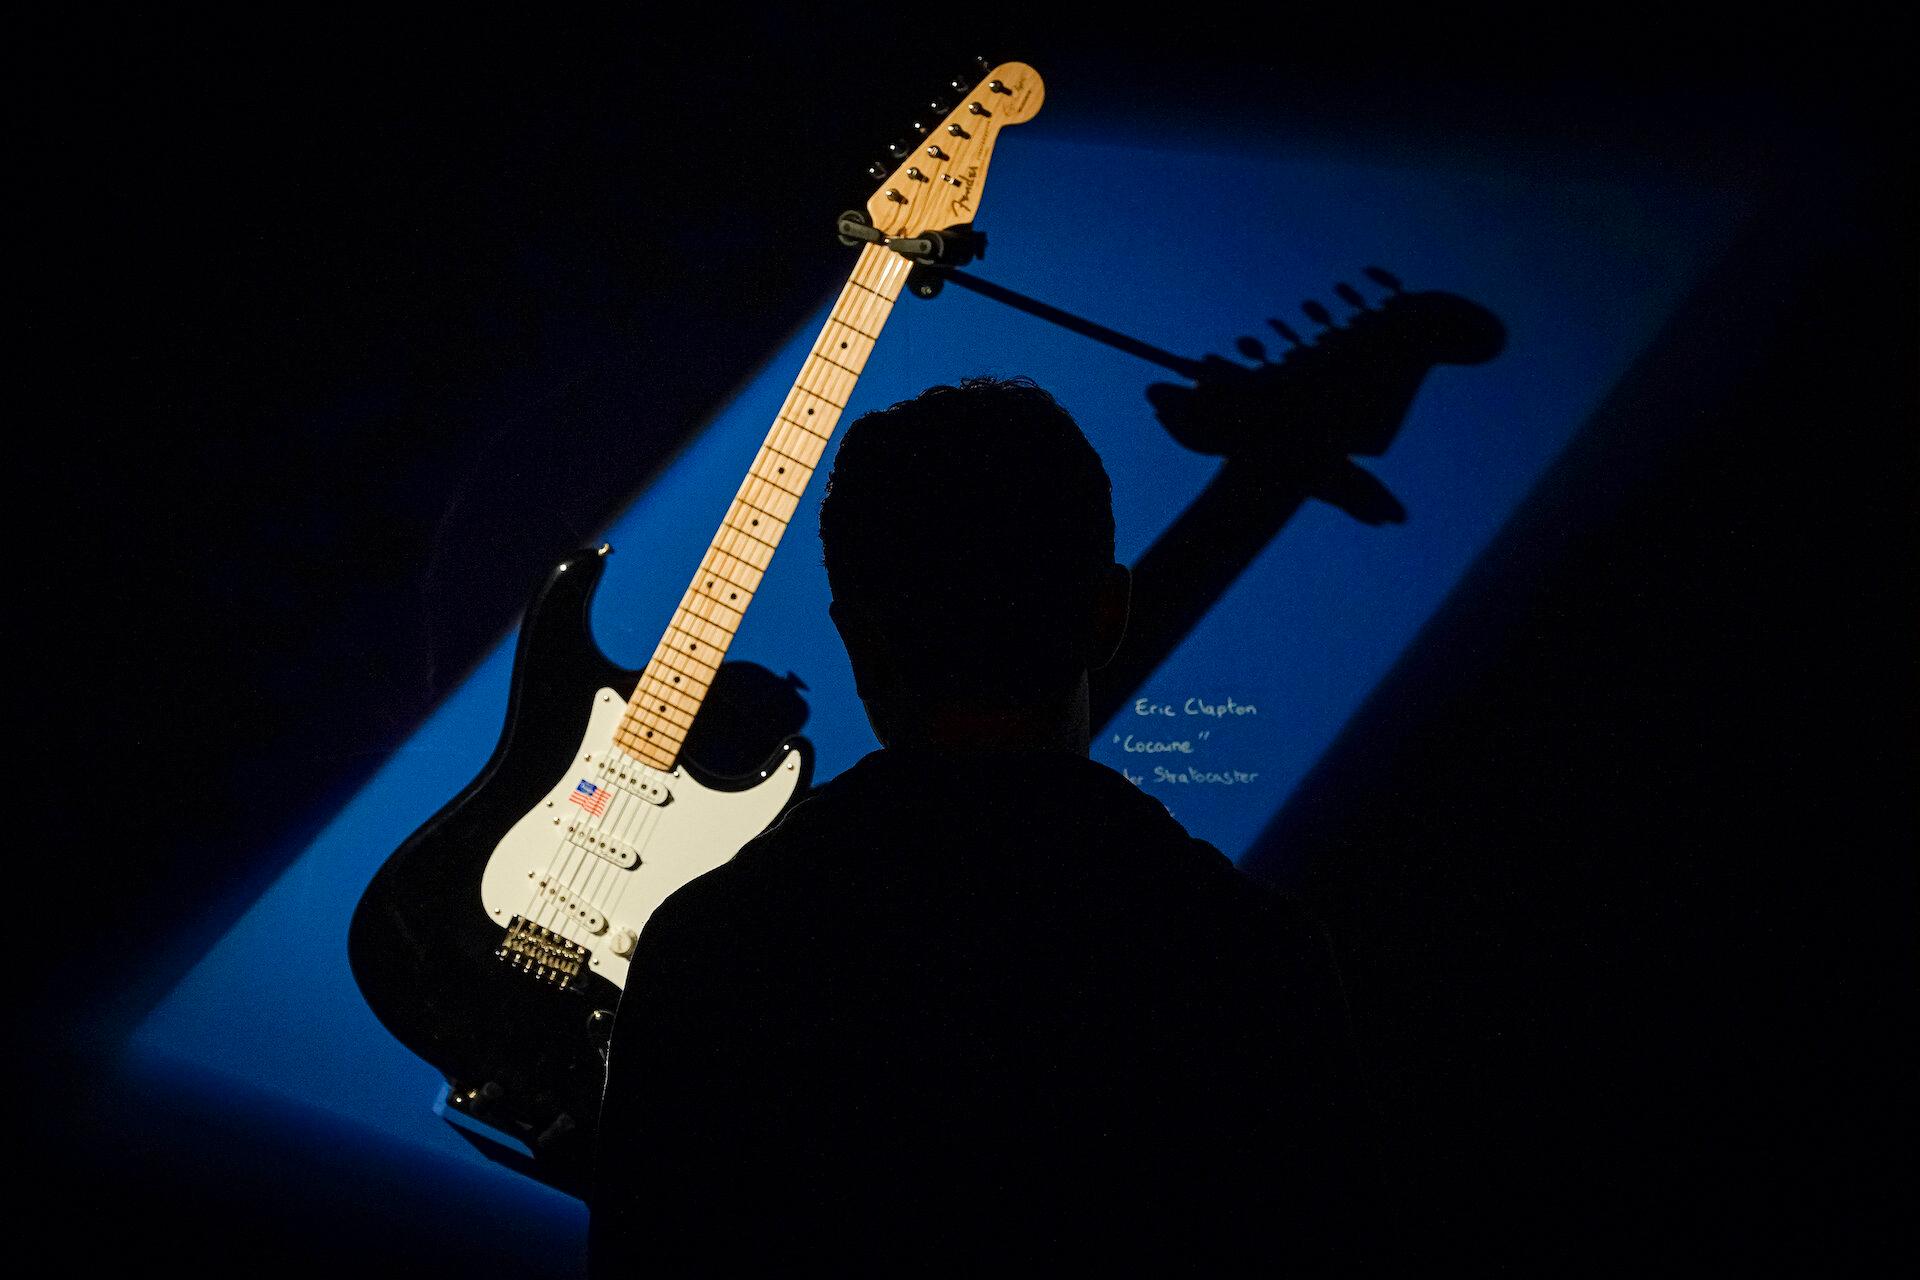 Monaco on stage La guitare d Eric Clapton...